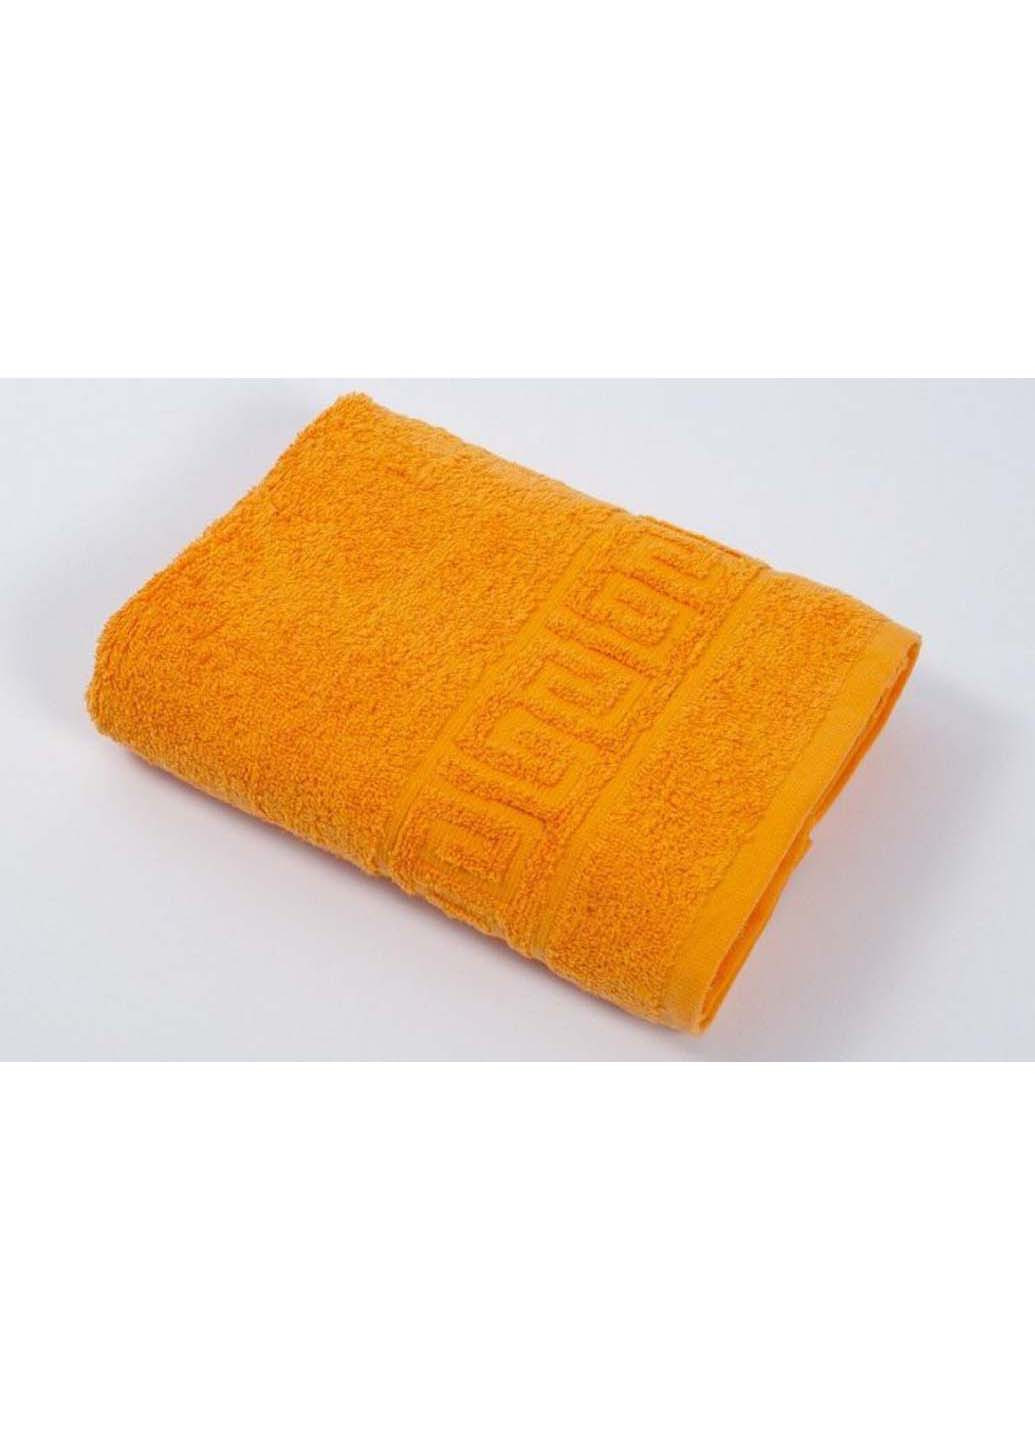 Ashgabat Dokma Toplumy полотенце для лица оранжевый производство - Туркменистан